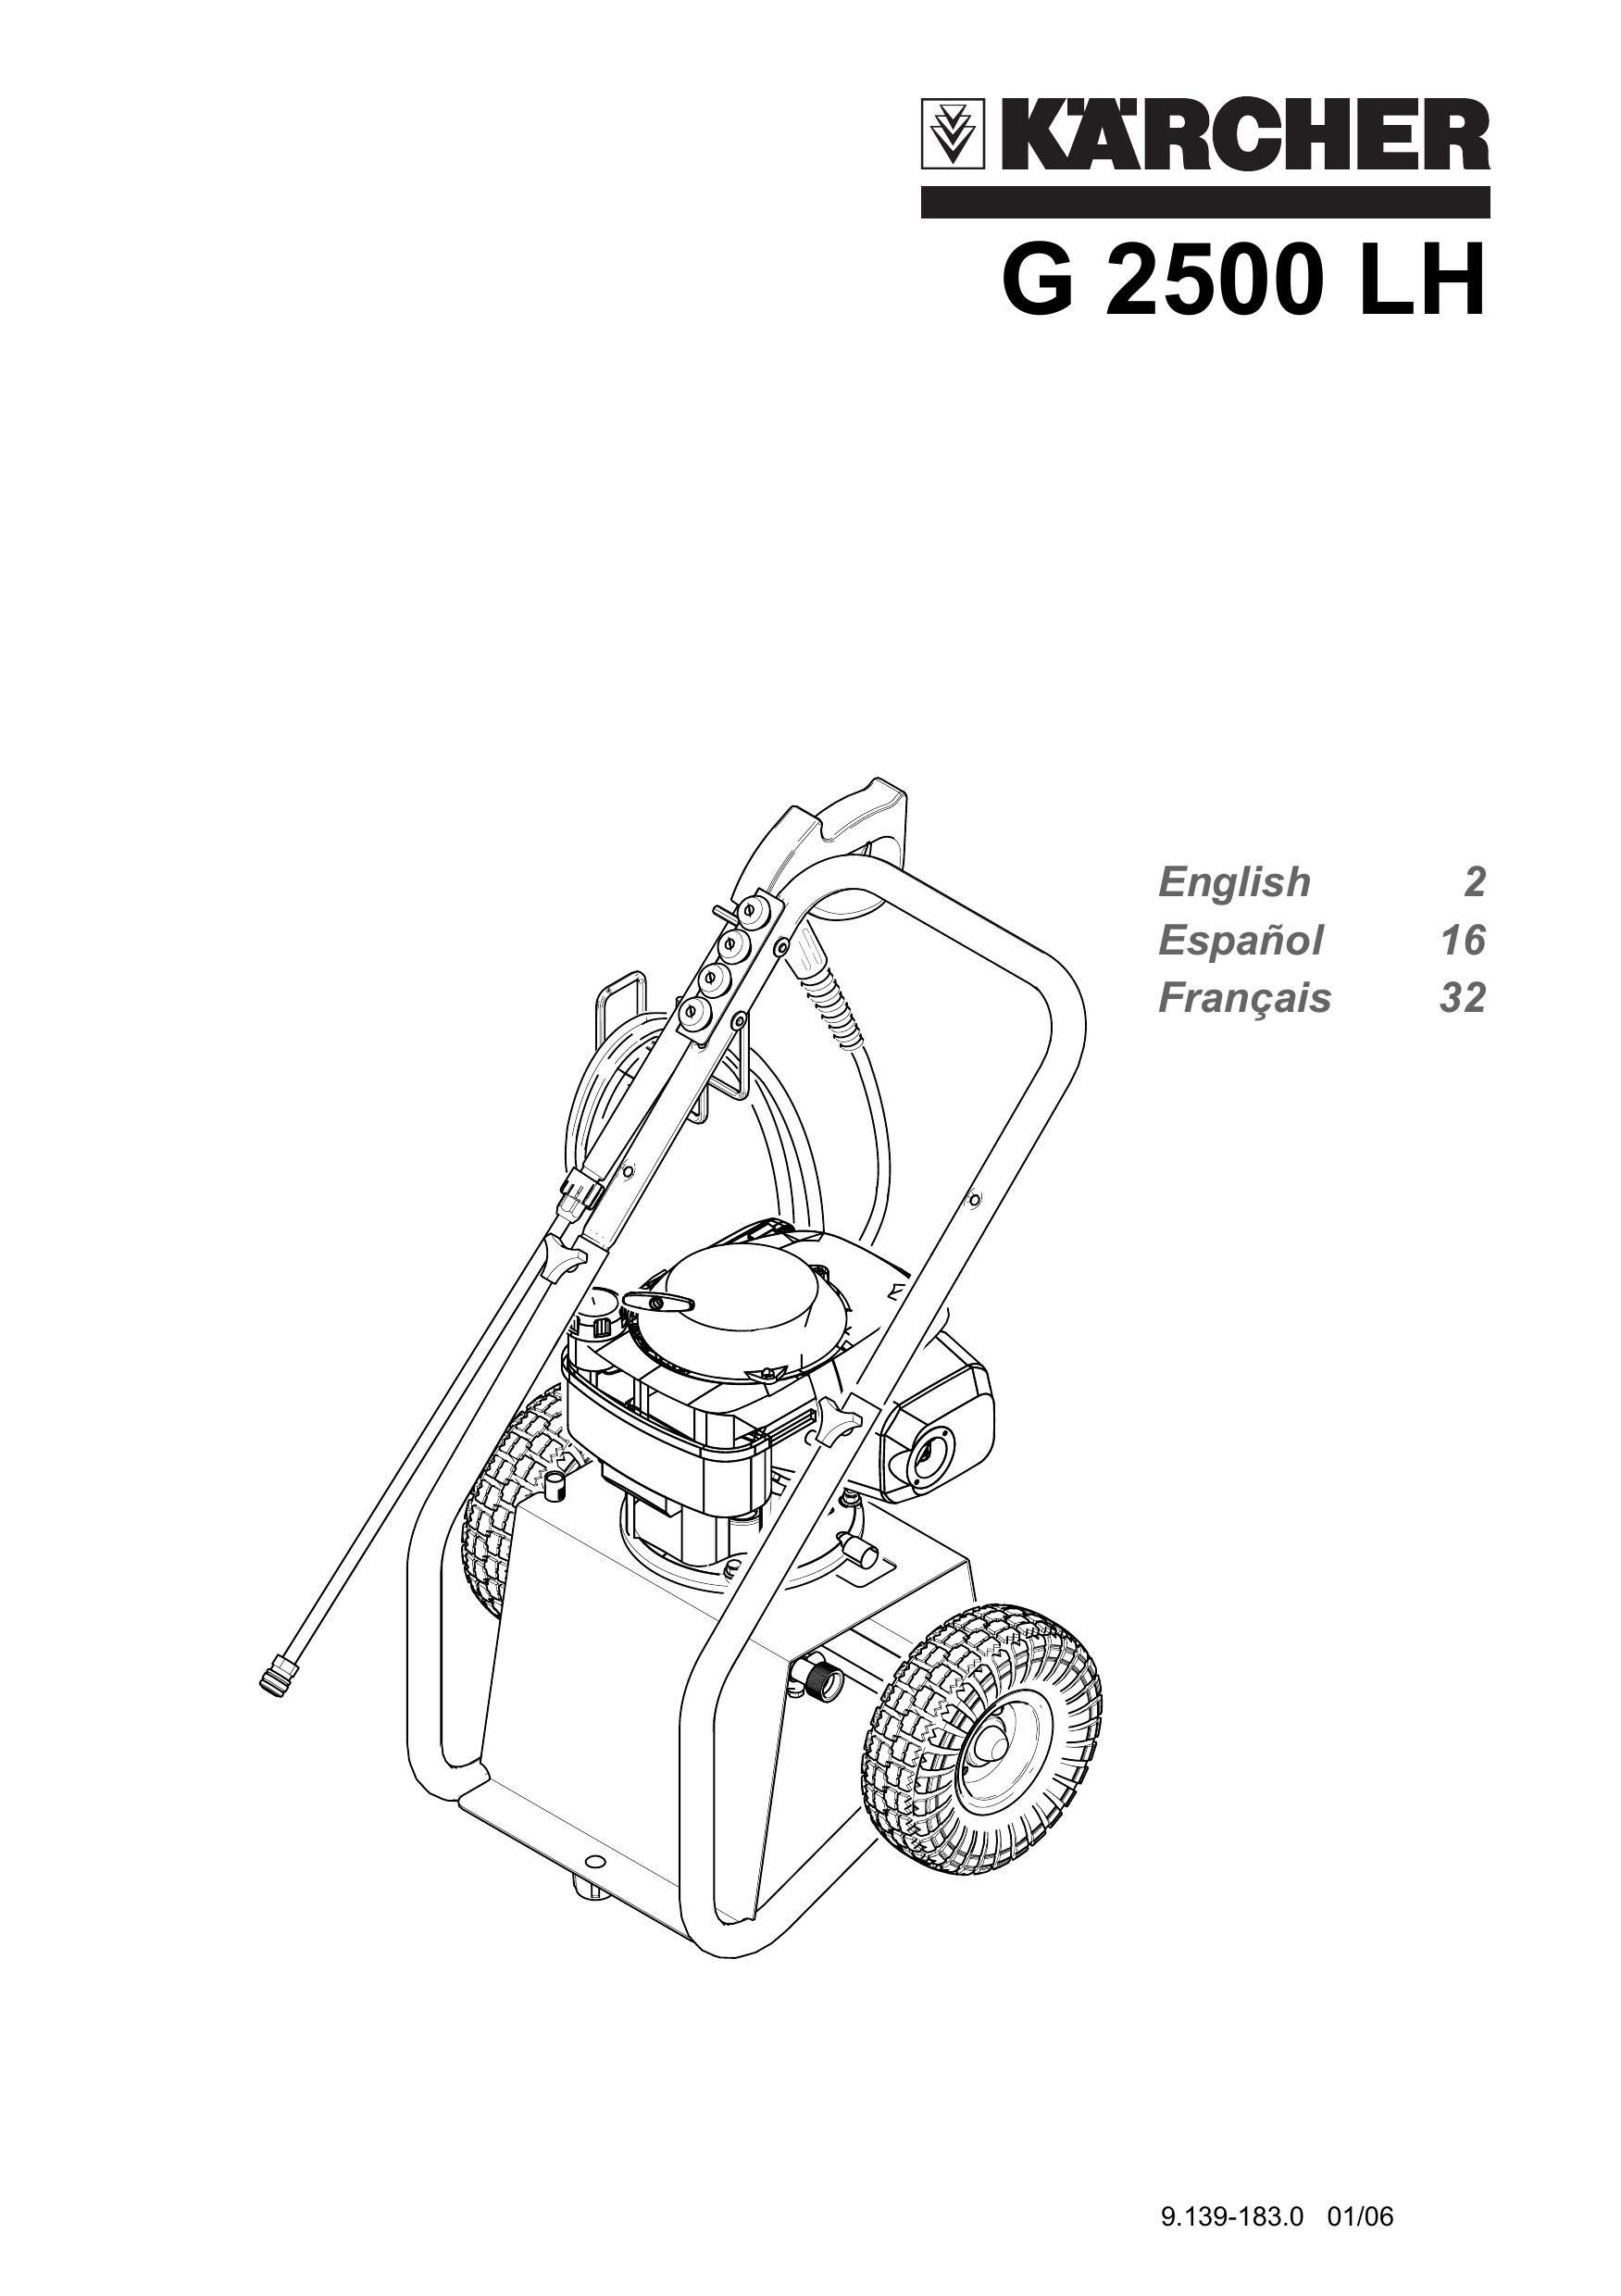 Karcher G 2500 LH Pressure Washer User Manual